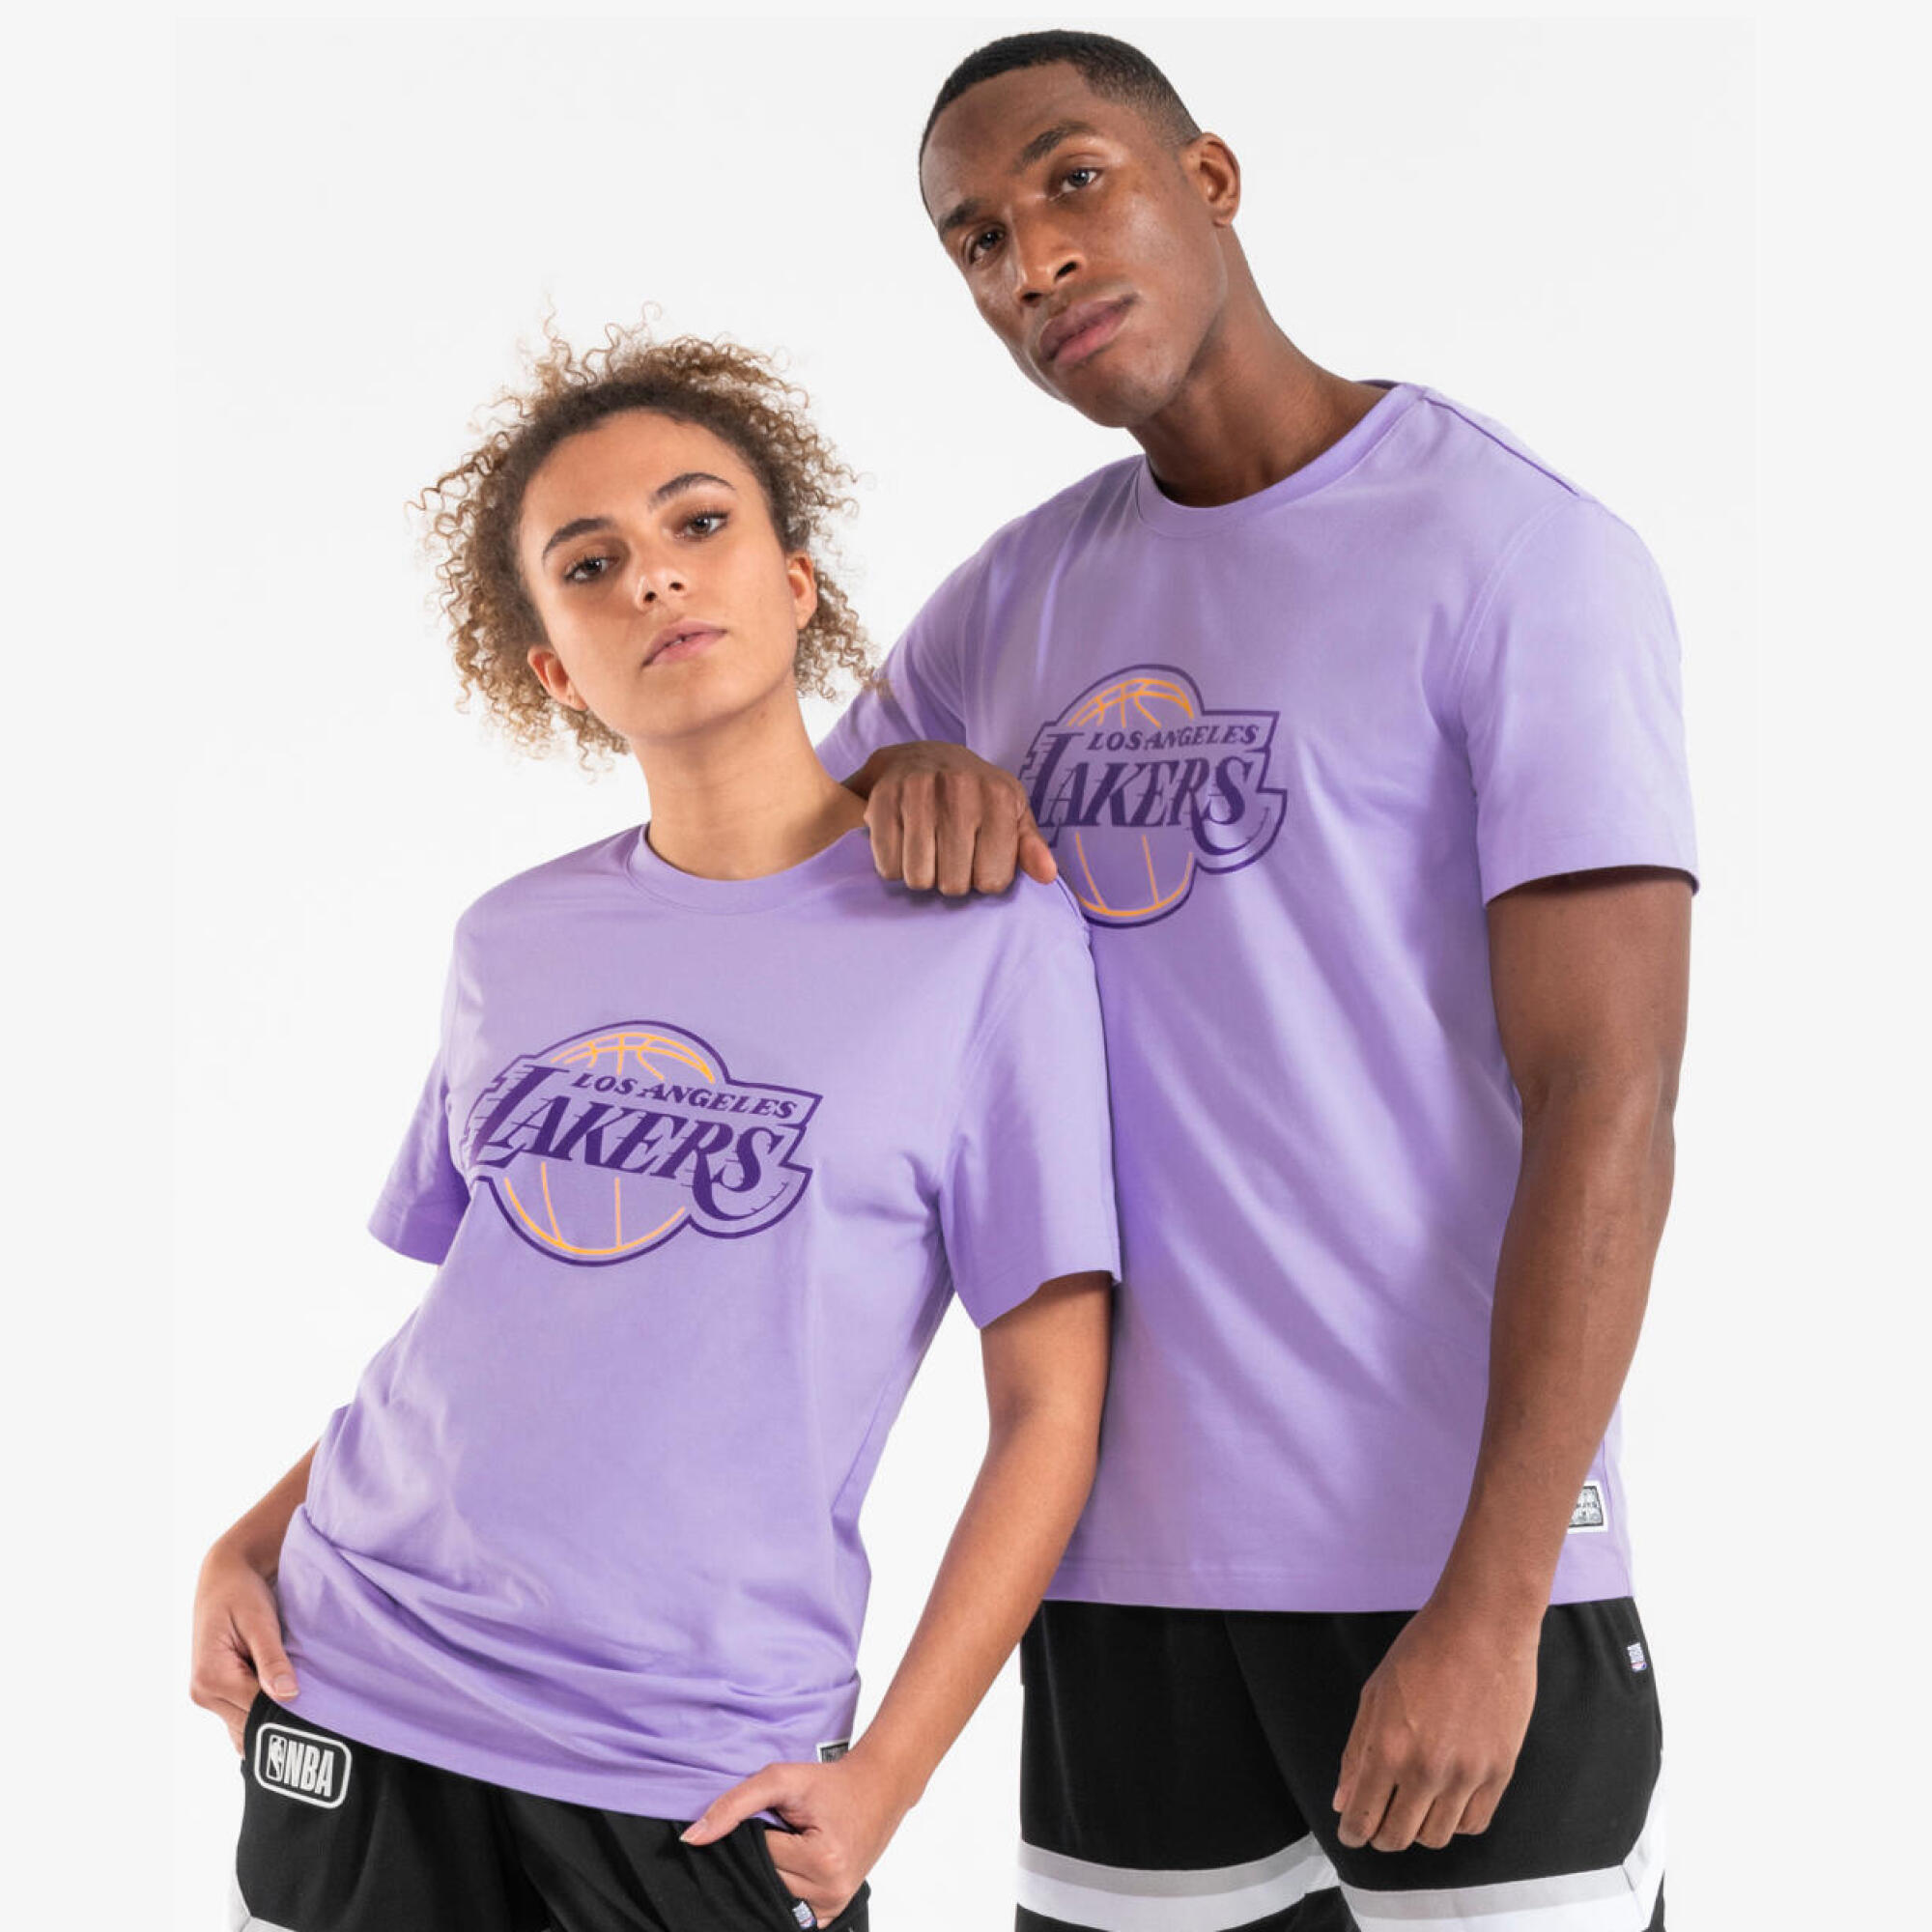 Decathlon | T-shirt basket adulto unisex TS 900 NBA Lakers lilla |  Tarmak